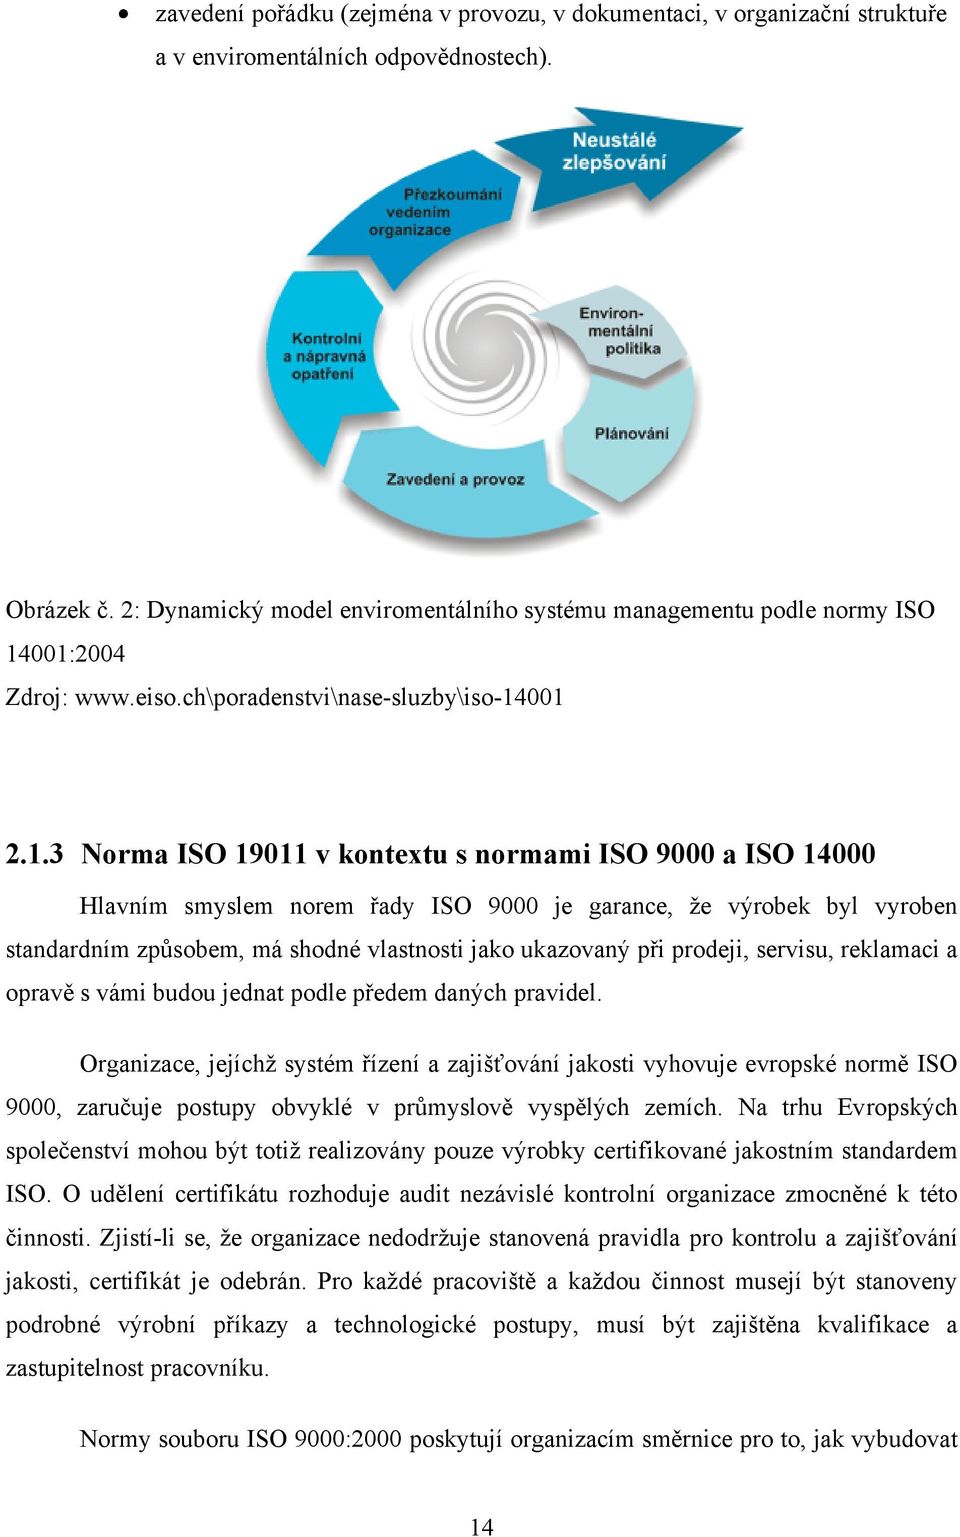 001:2004 Zdroj: www.eiso.ch\poradenstvi\nase-sluzby\iso-14001 2.1.3 Norma ISO 19011 v kontextu s normami ISO 9000 a ISO 14000 Hlavním smyslem norem řady ISO 9000 je garance, ţe výrobek byl vyroben